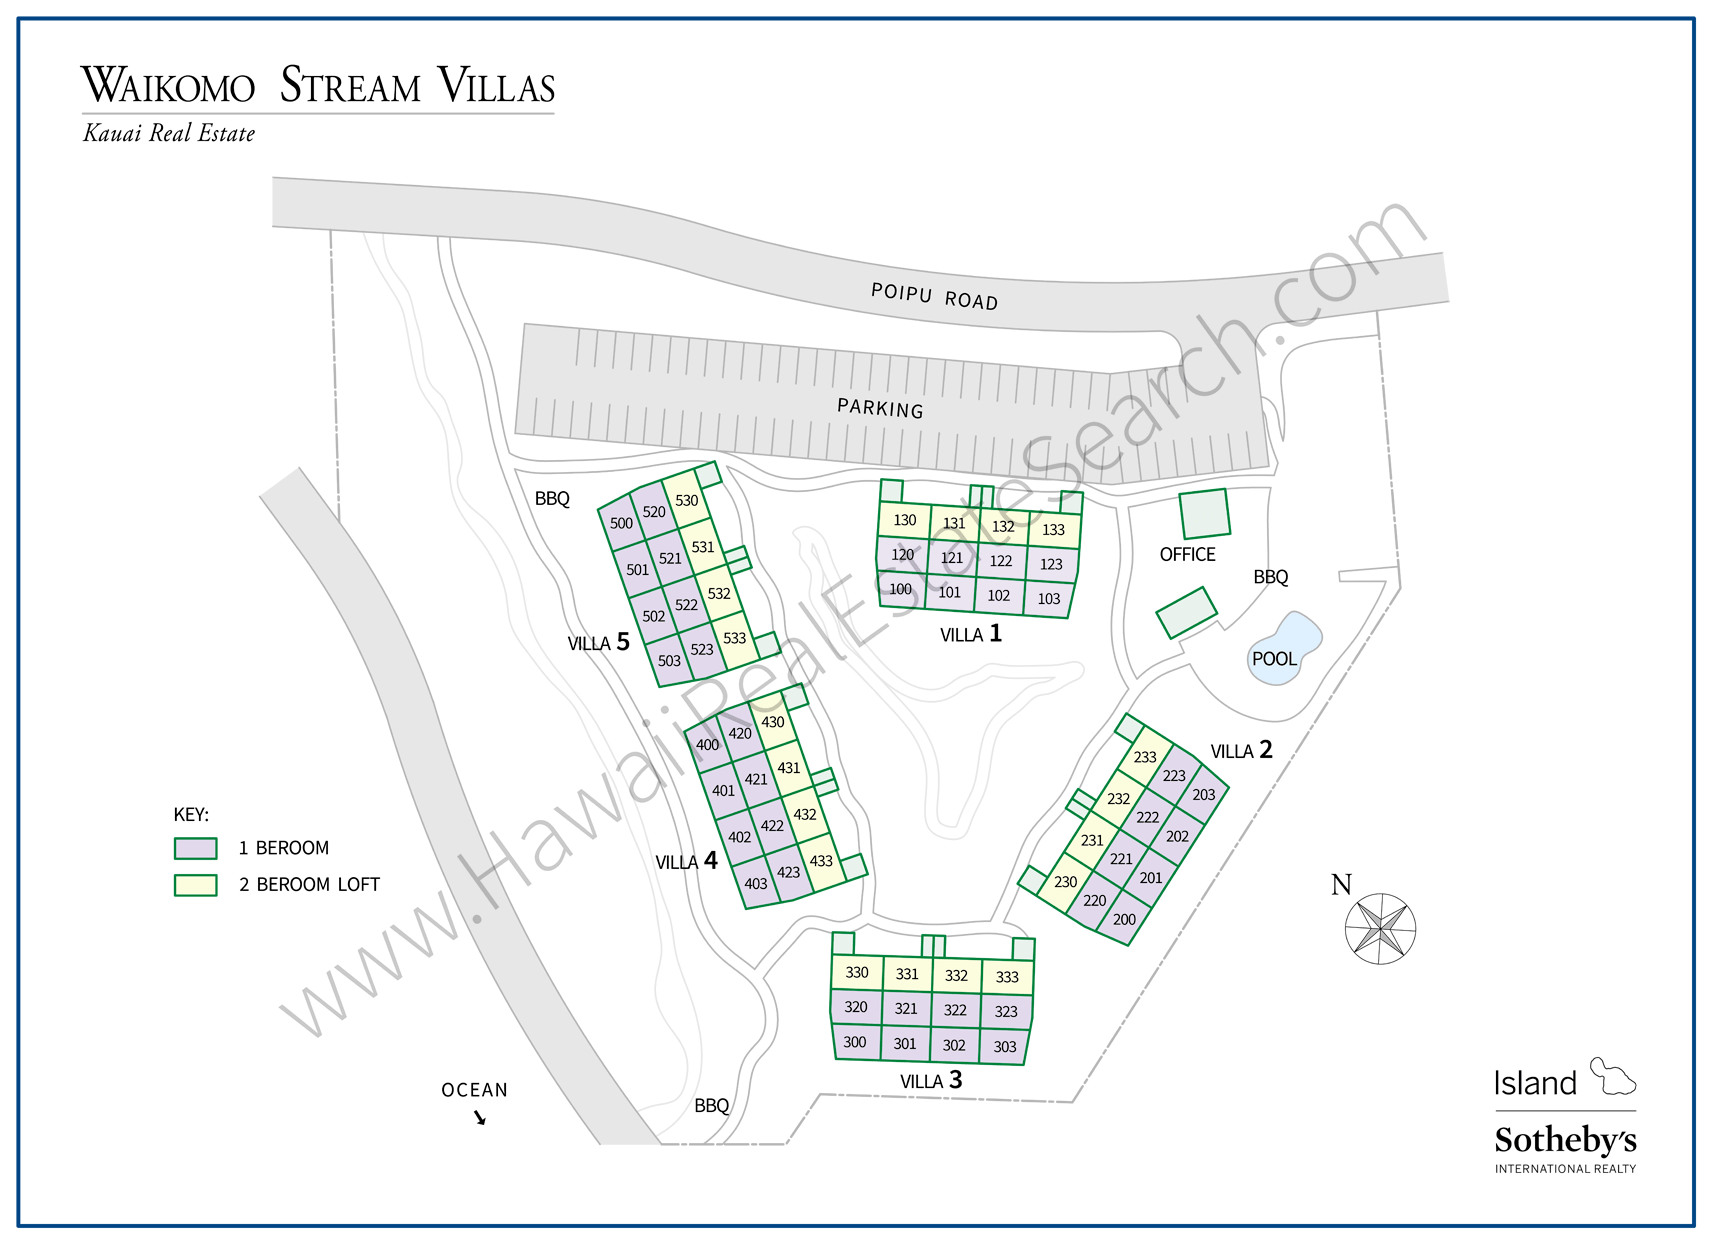 Waikomo Stream Villas Property Map